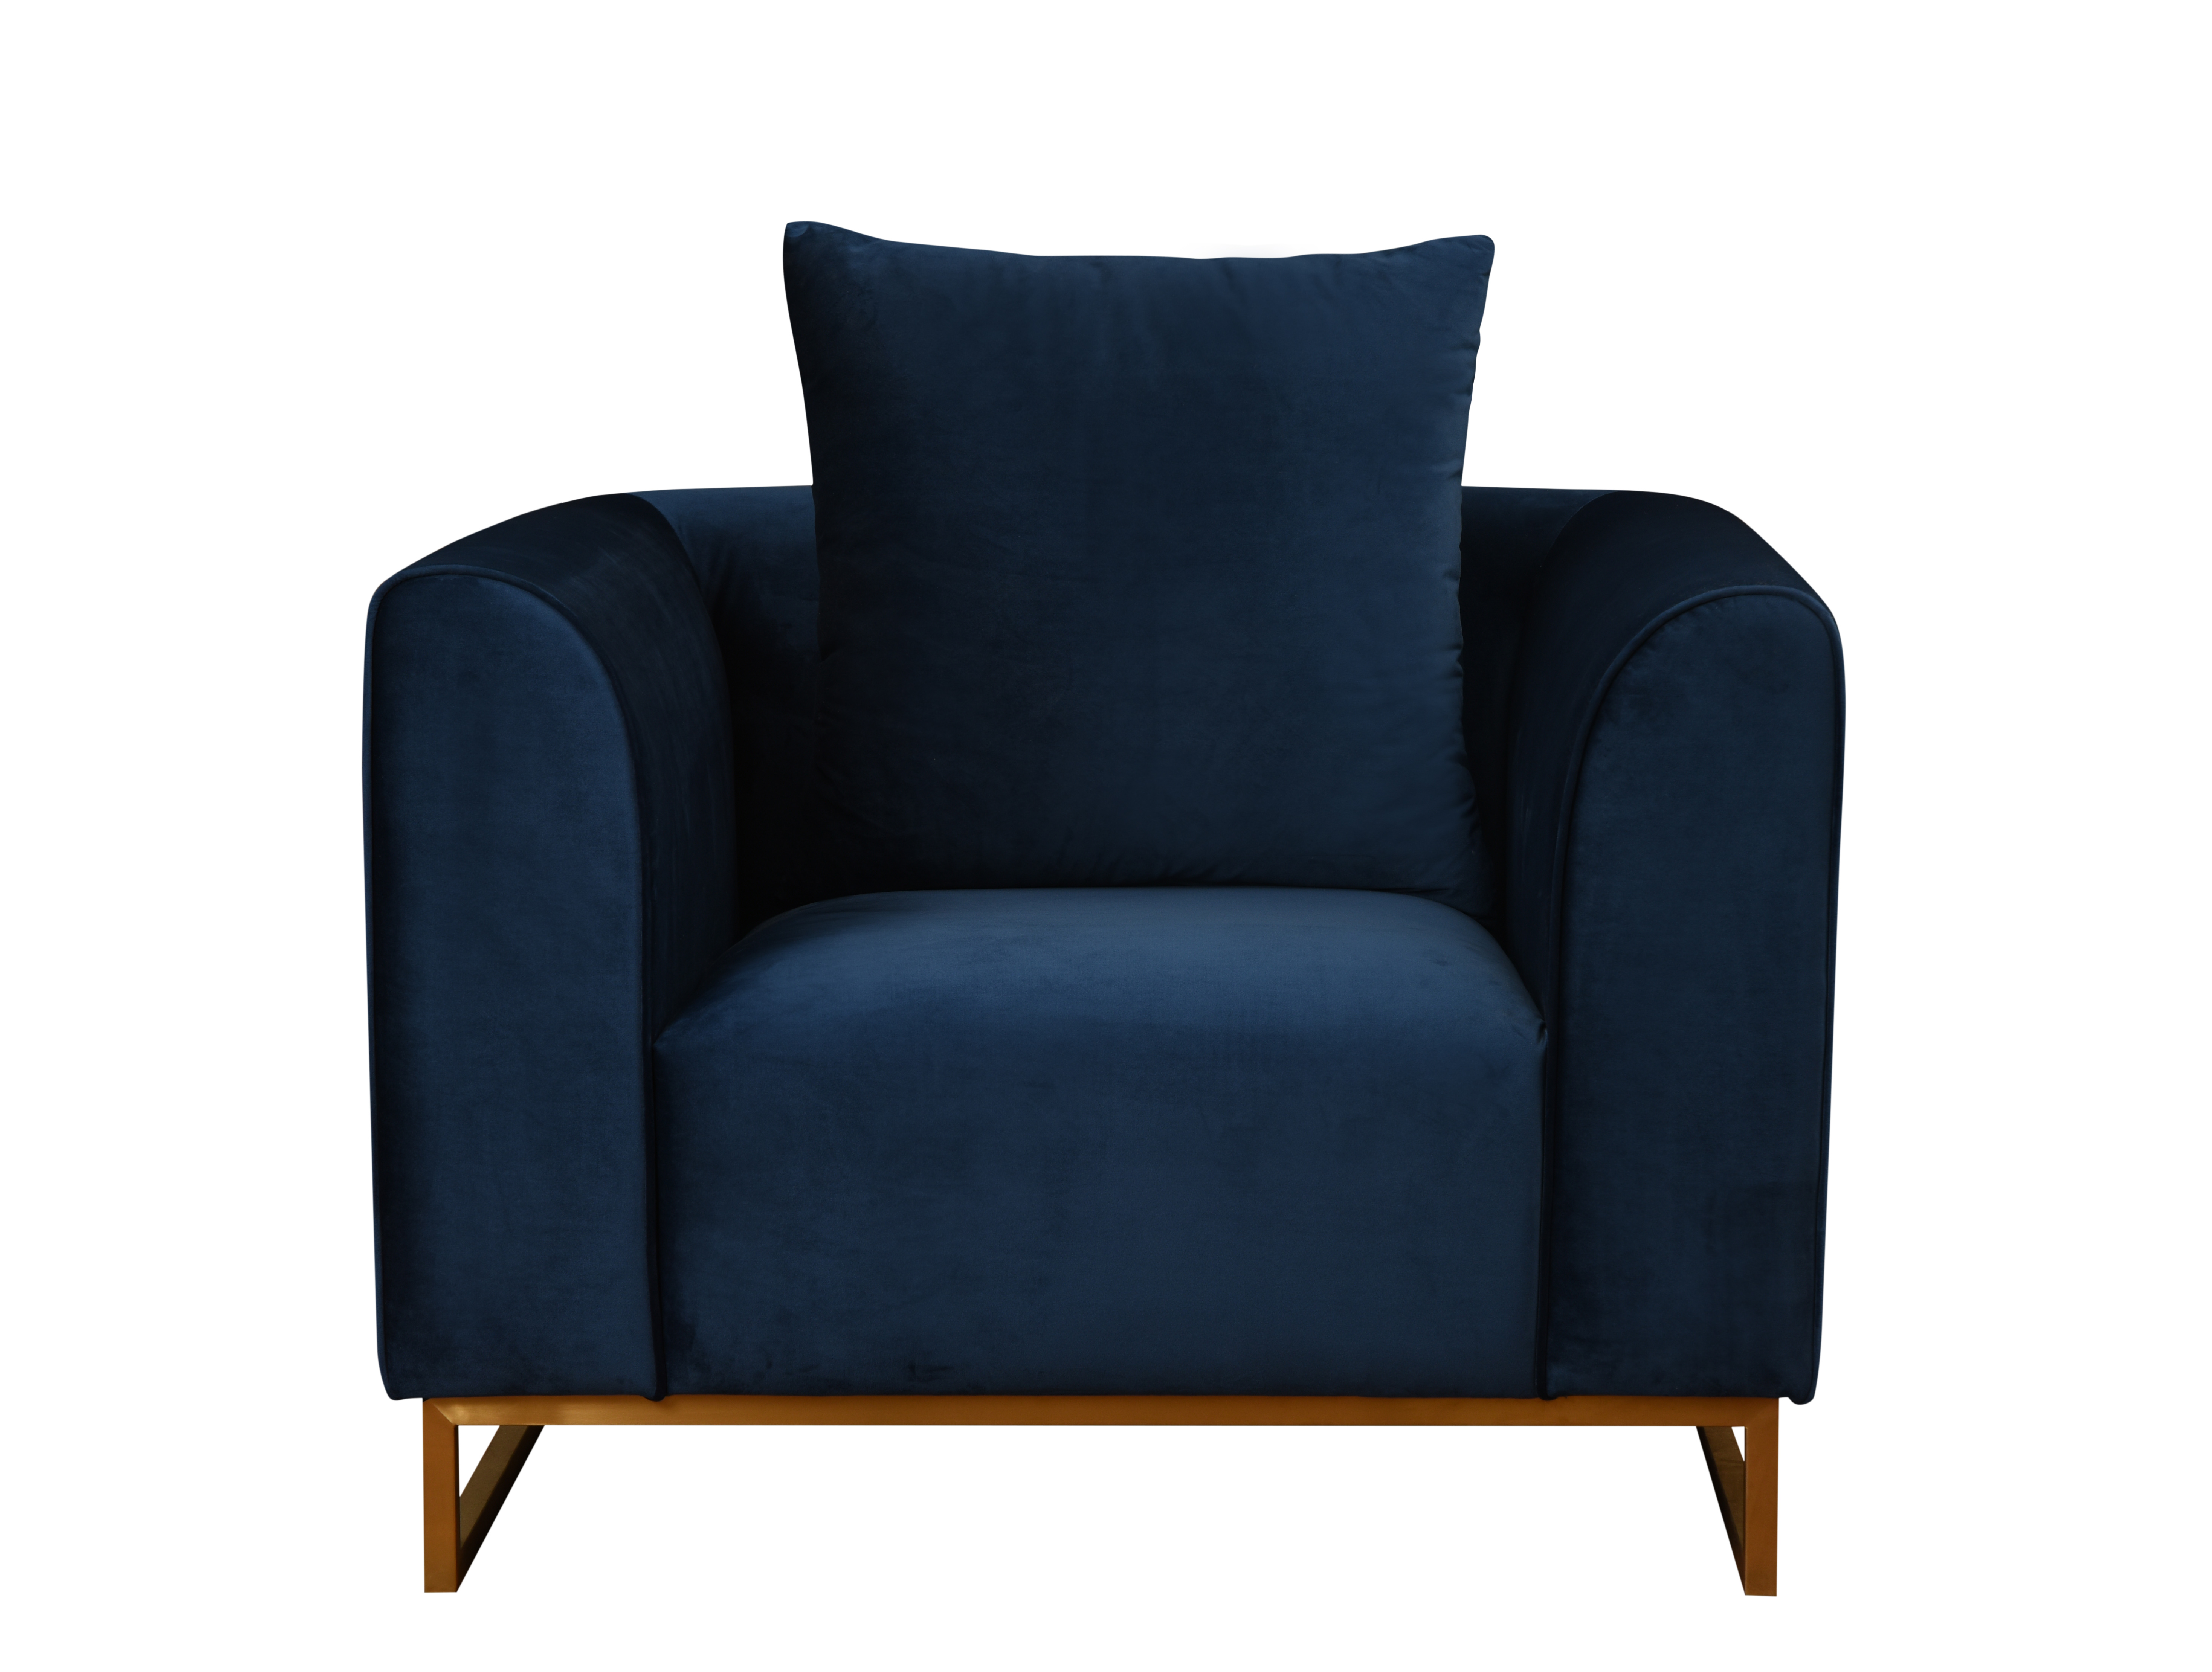 blue velvet 6 seat living room sofa set furniture spot delivery of US East warehouse including delivery fee